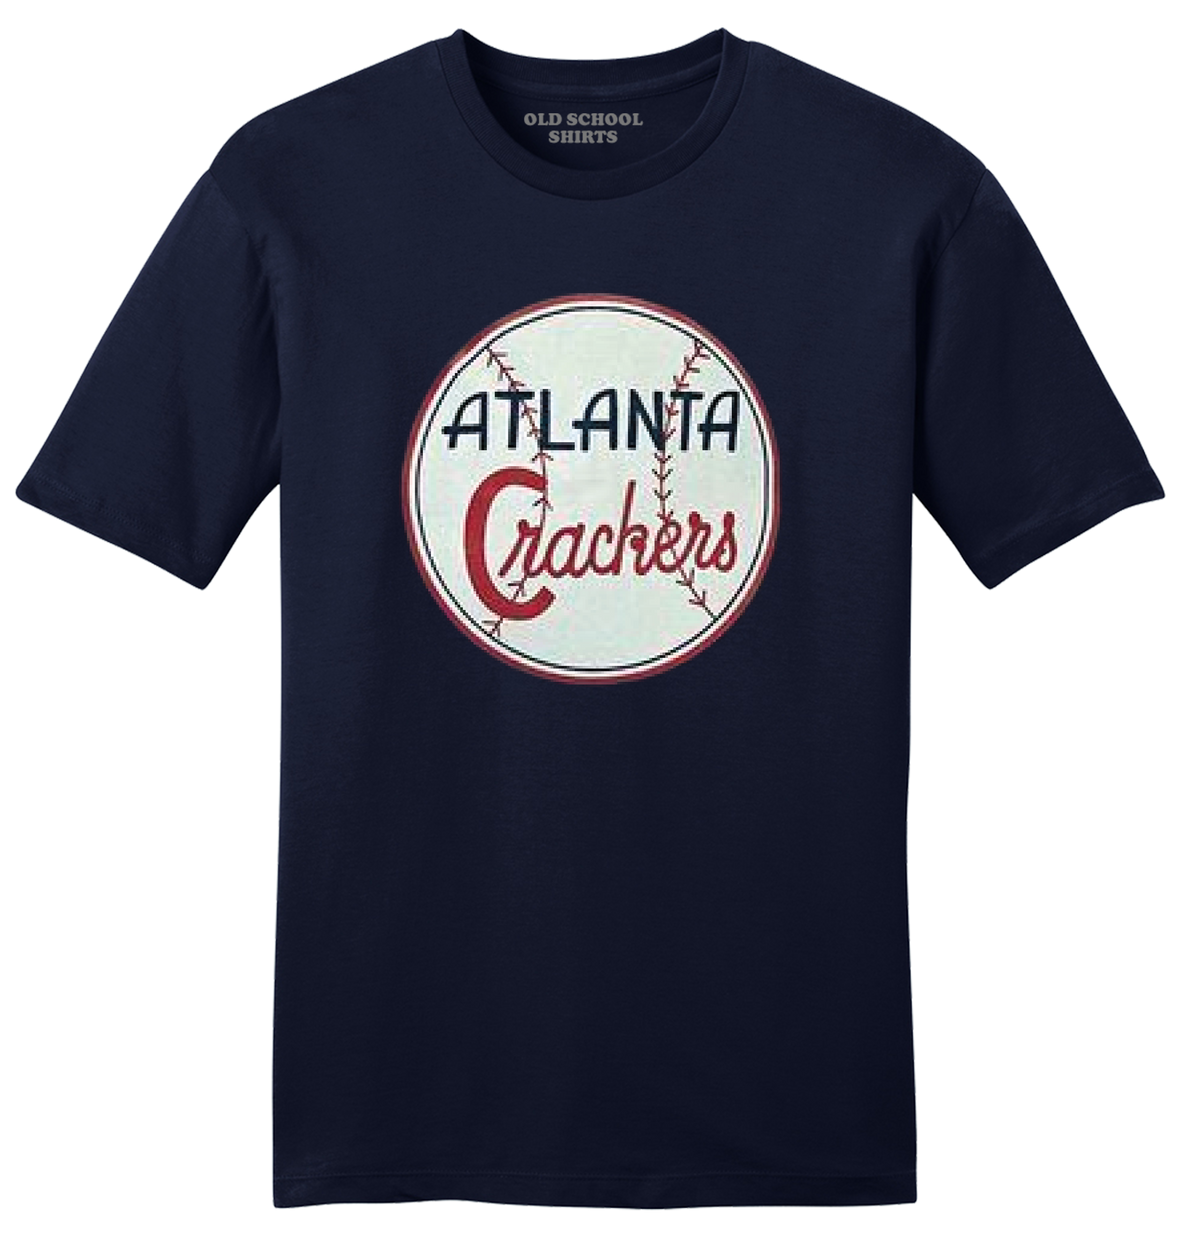 Atlanta Crackers Baseball